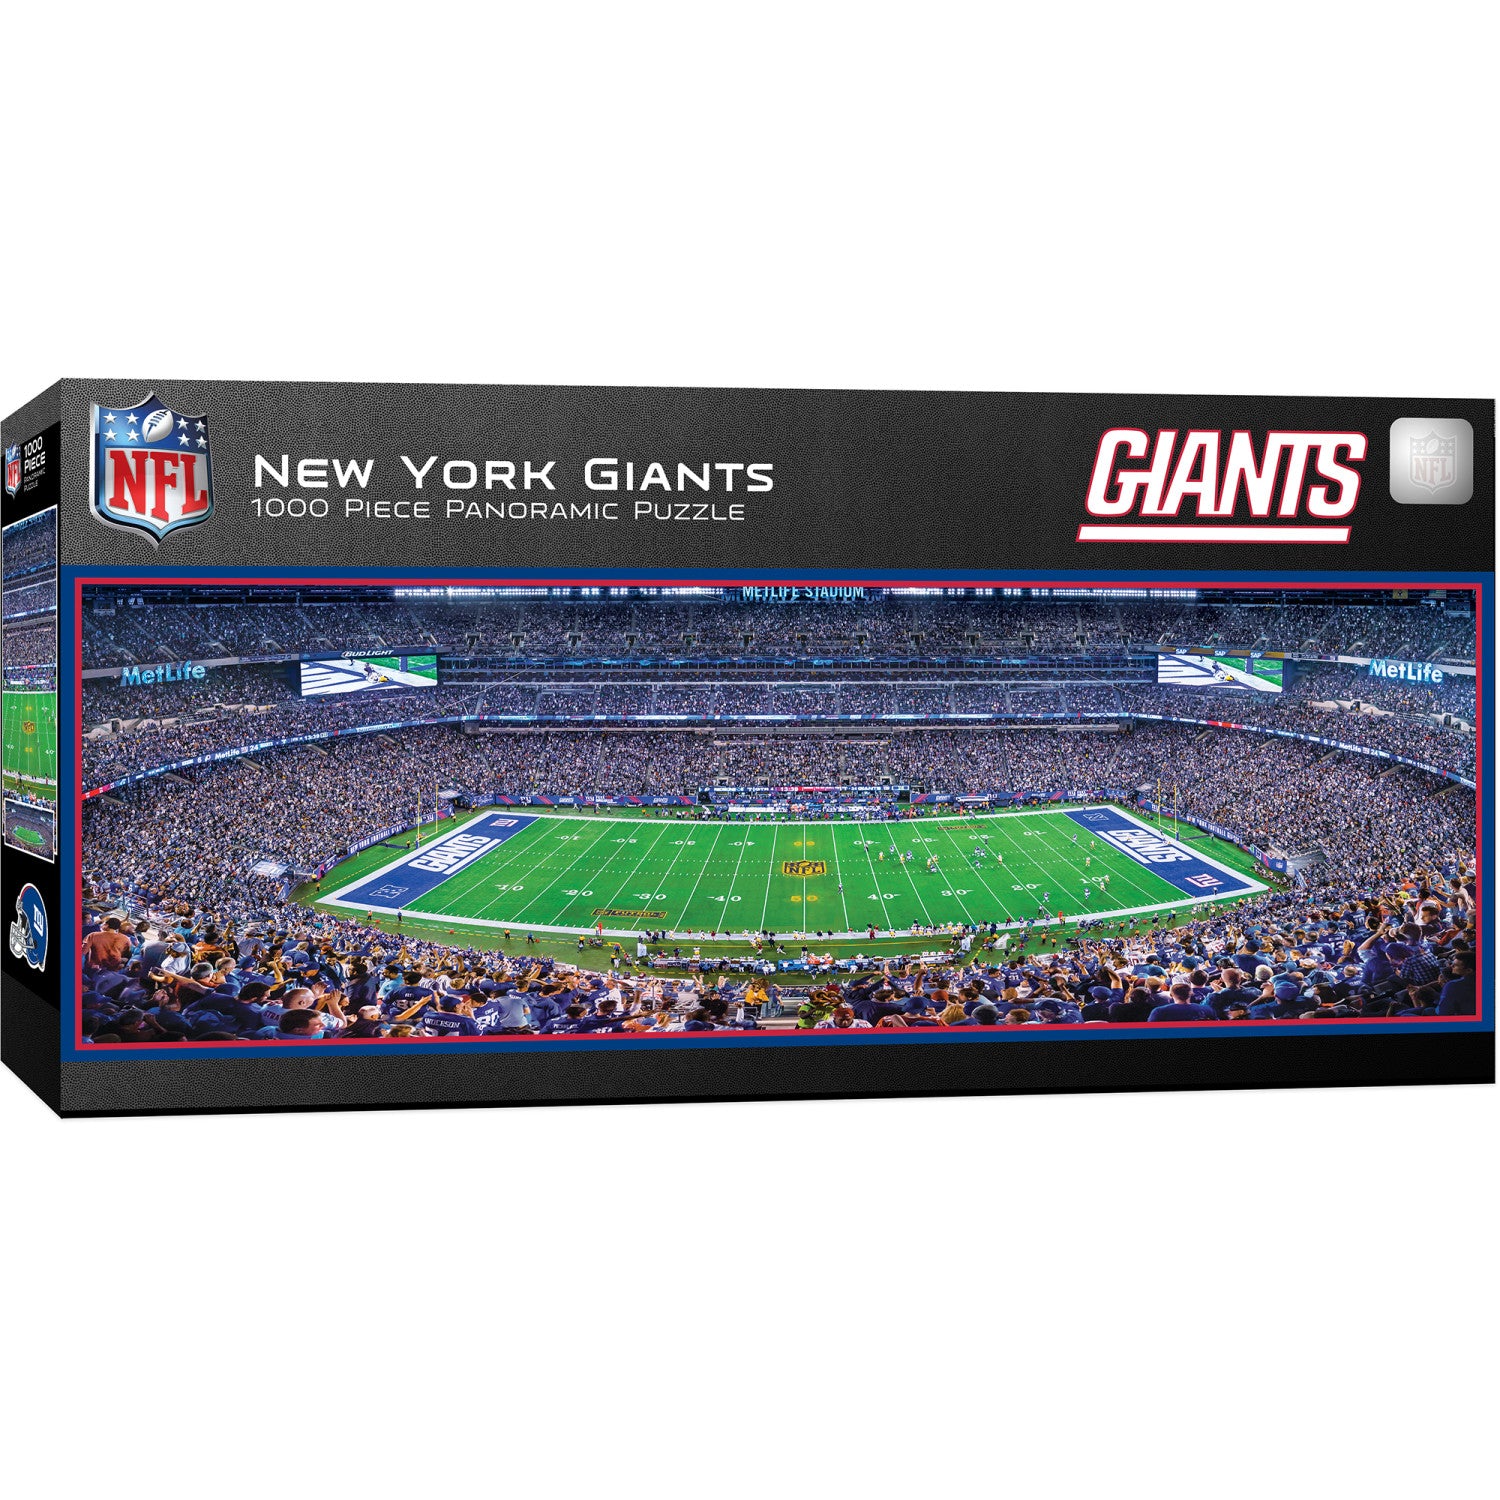 New York Giants - 1000 Piece Panoramic Puzzle